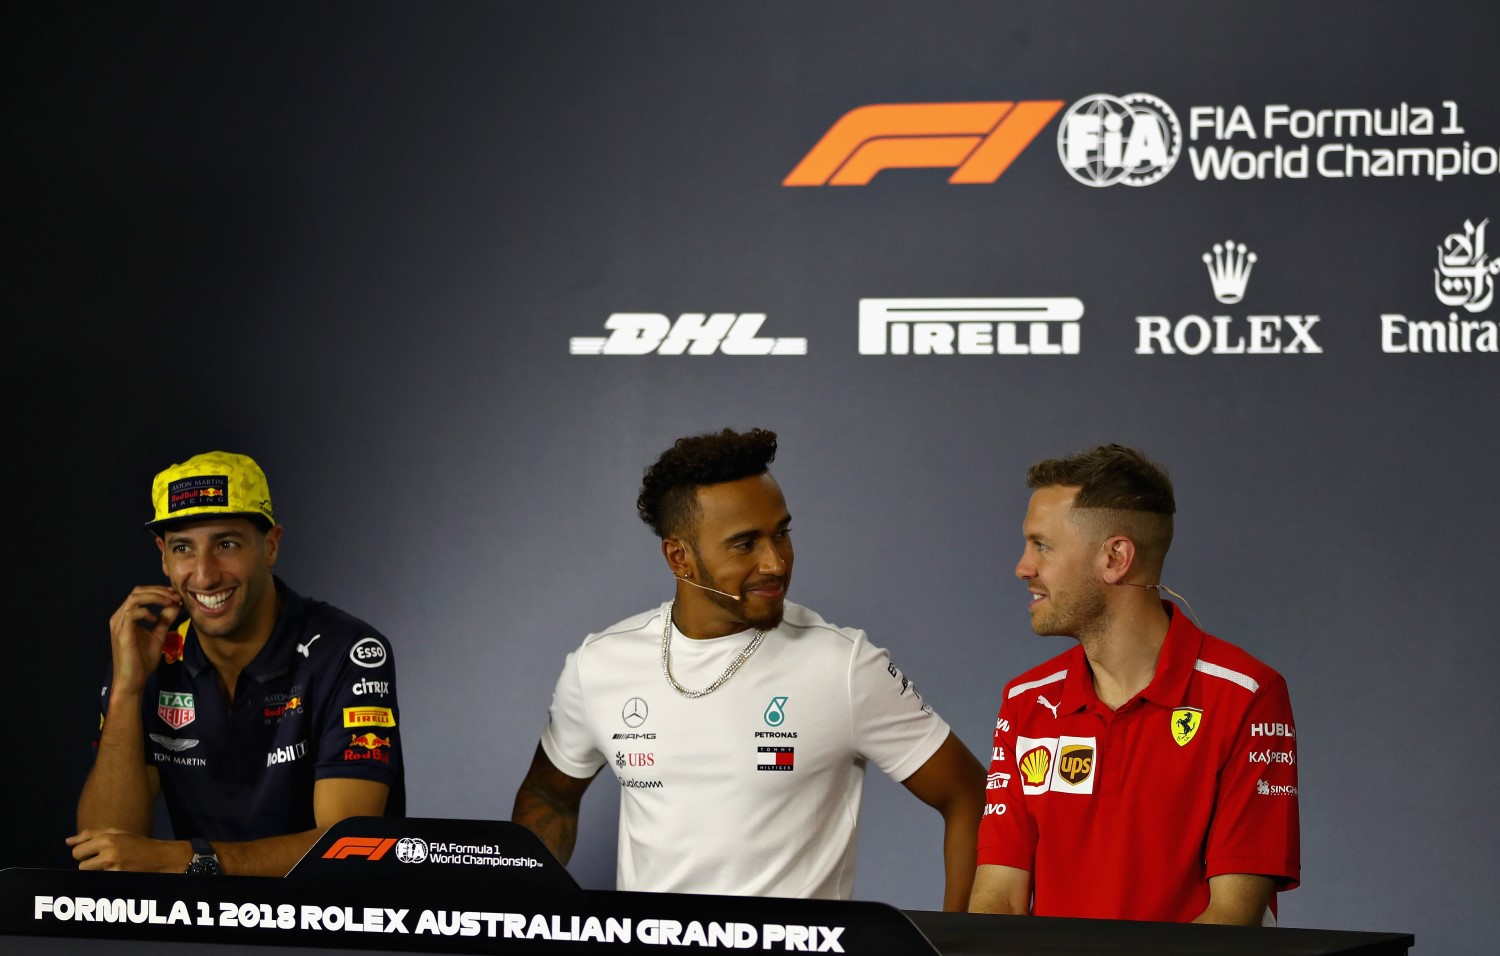 Ricciardo, Hamilton and Vettel - the three best drivers in F1 today